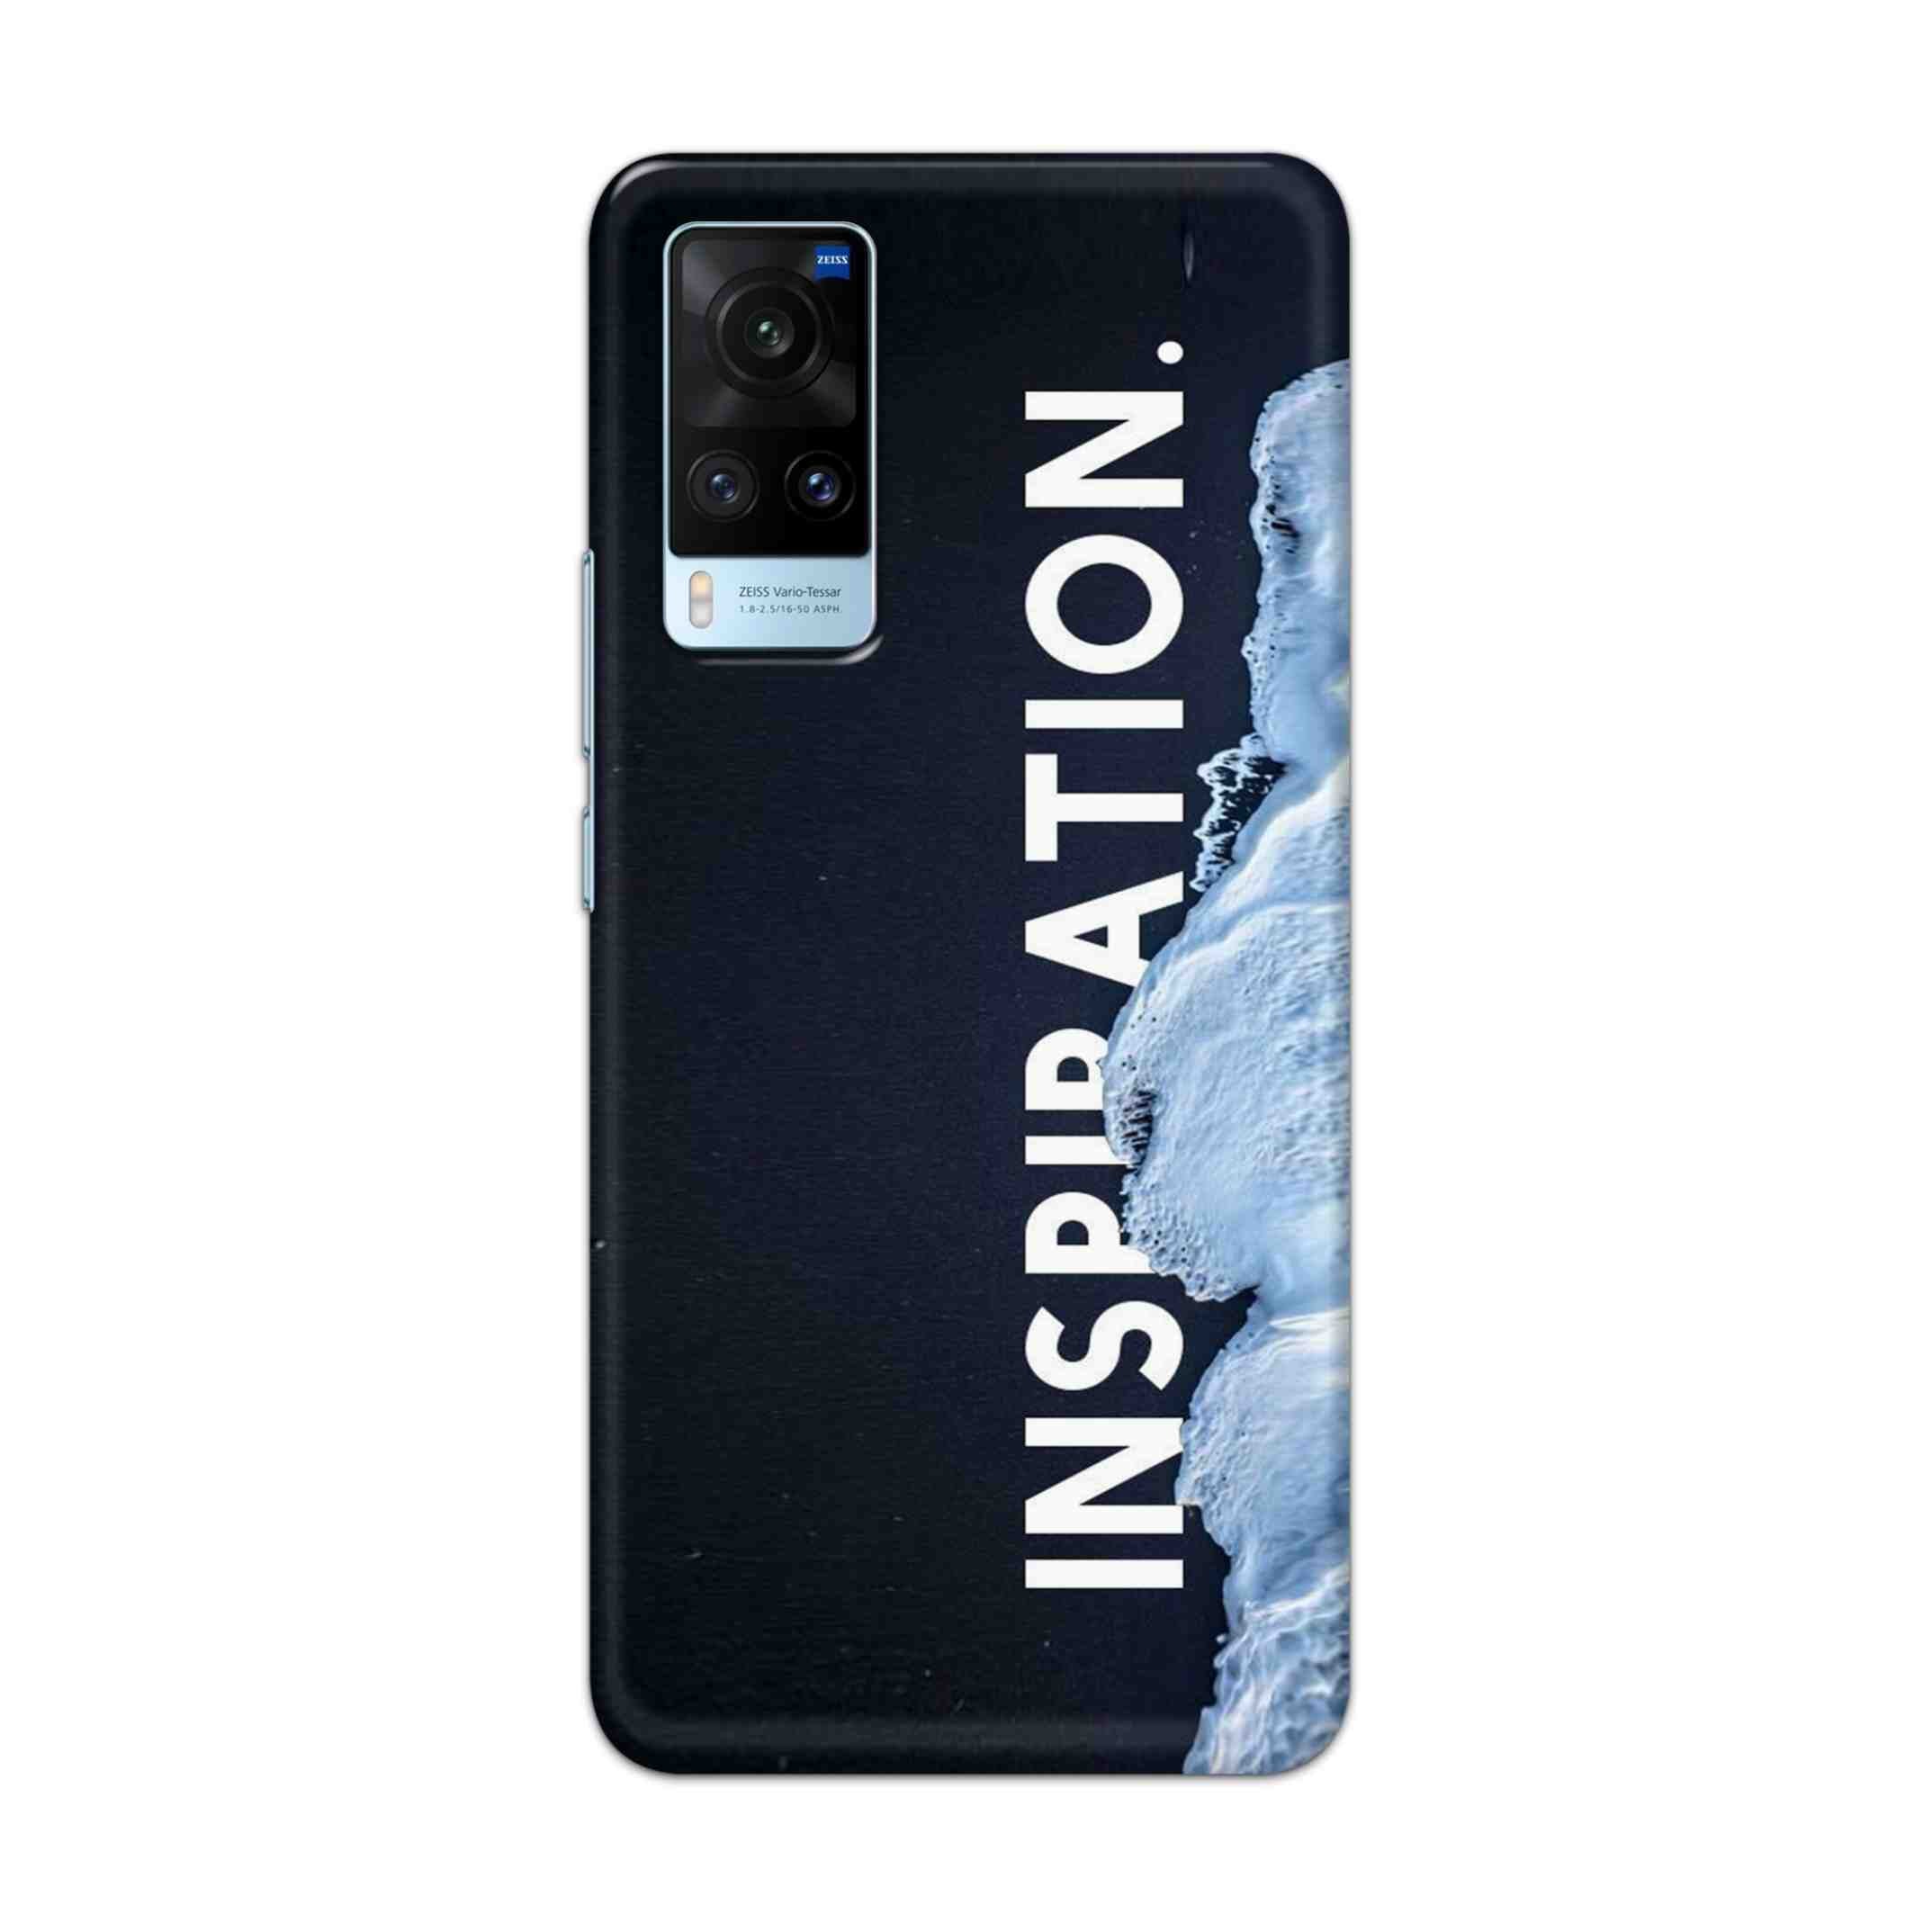 Buy Inspiration Hard Back Mobile Phone Case Cover For Vivo X60 Online